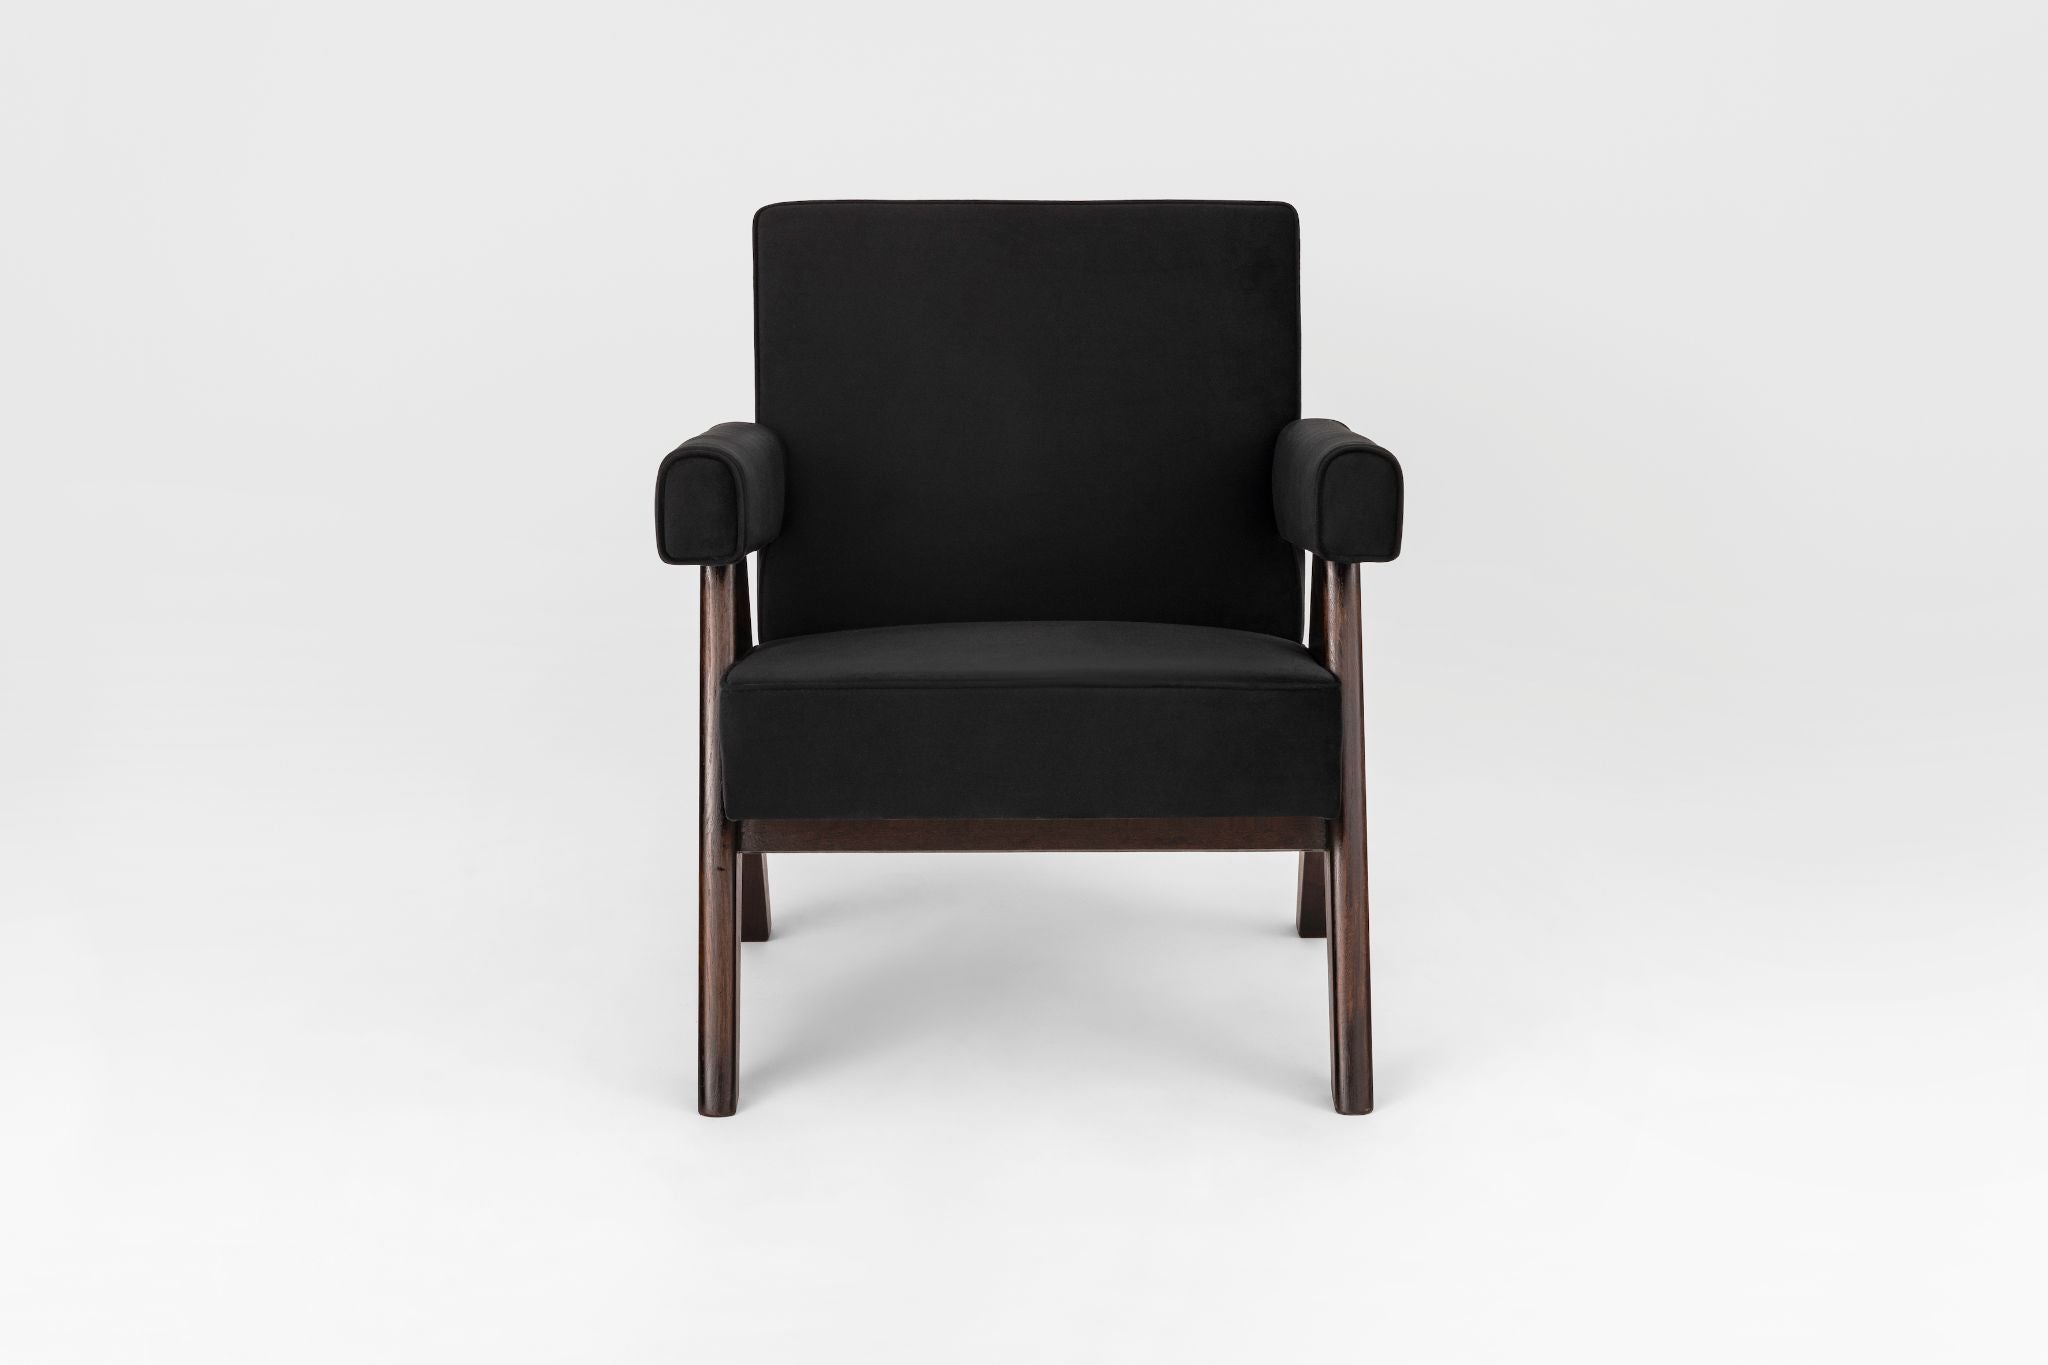 Easy Lounge Sofa - The Design Part